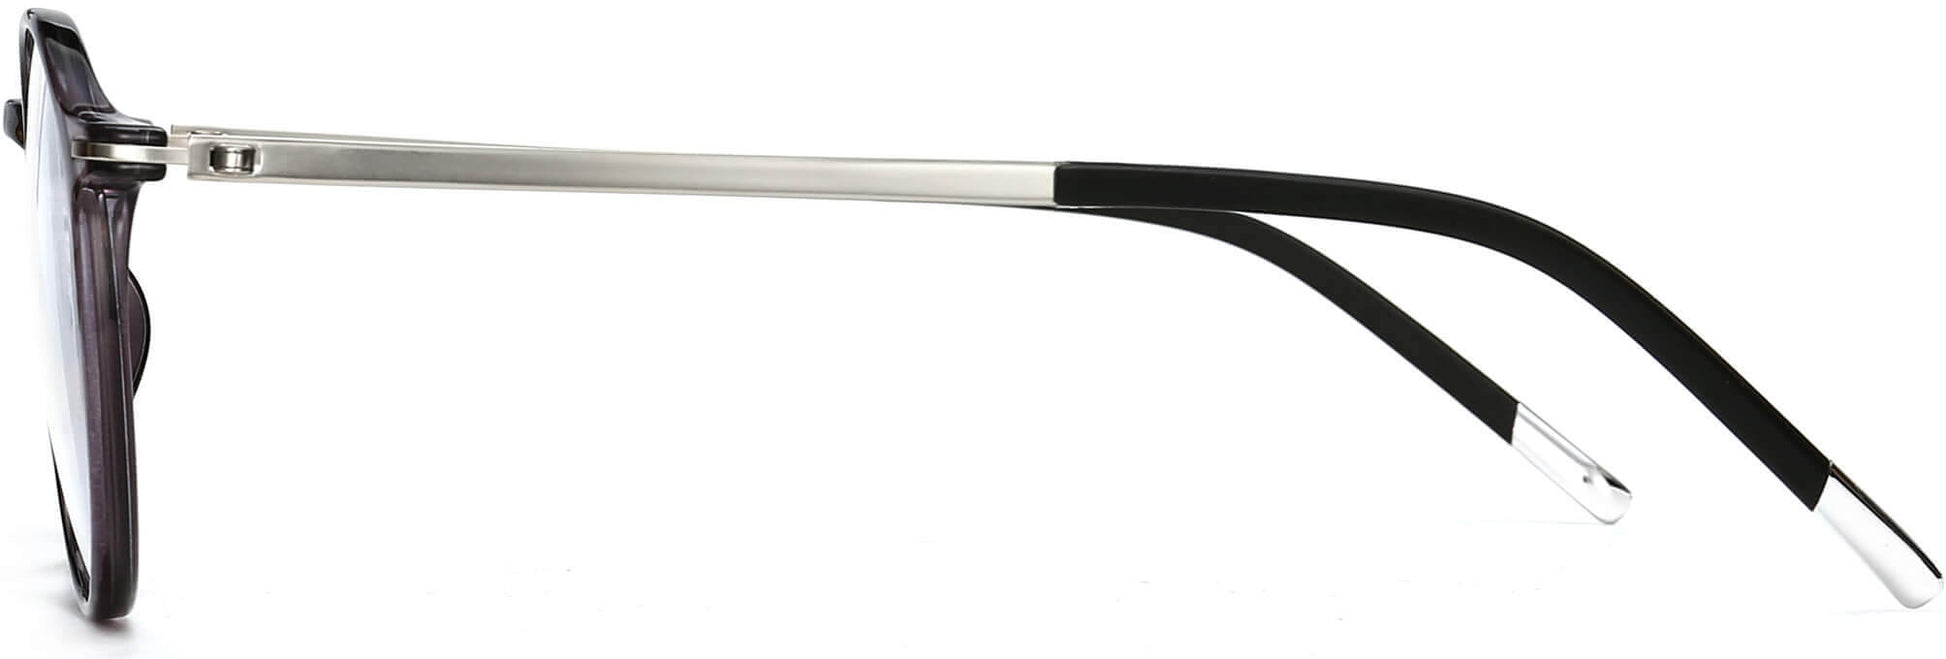 libra gray Eyeglasses from ANRRI, side view